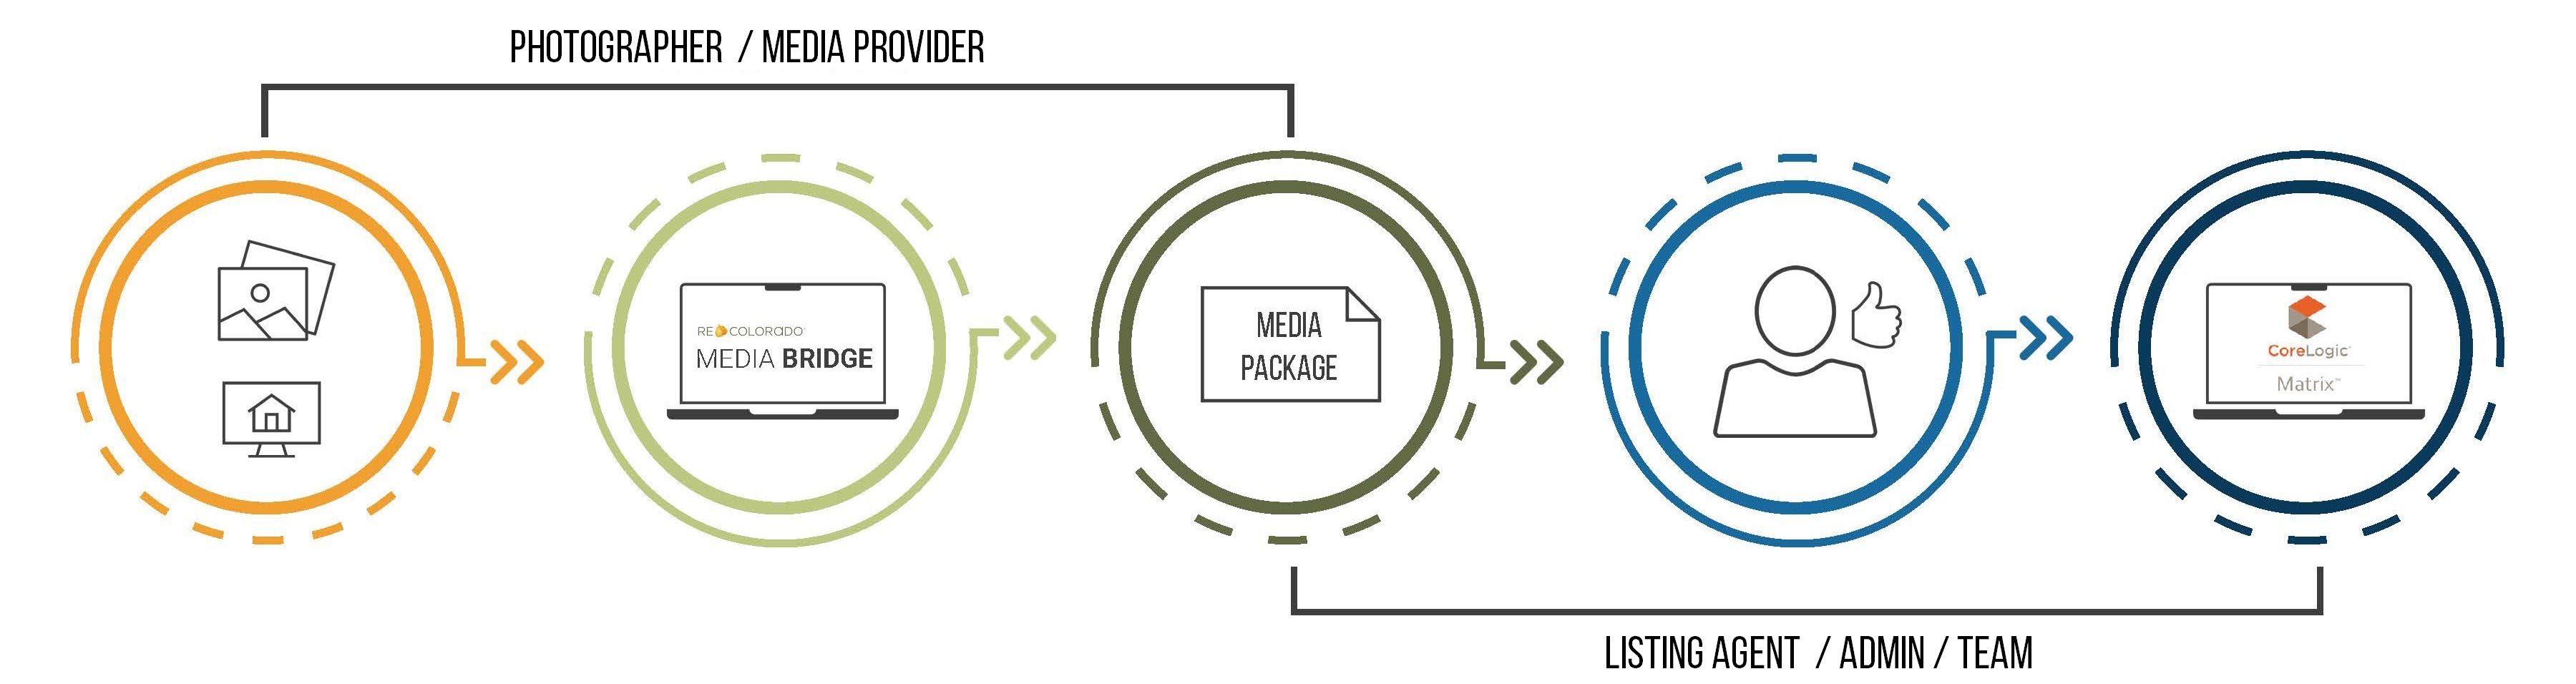 Media Bridge Process - How it Works